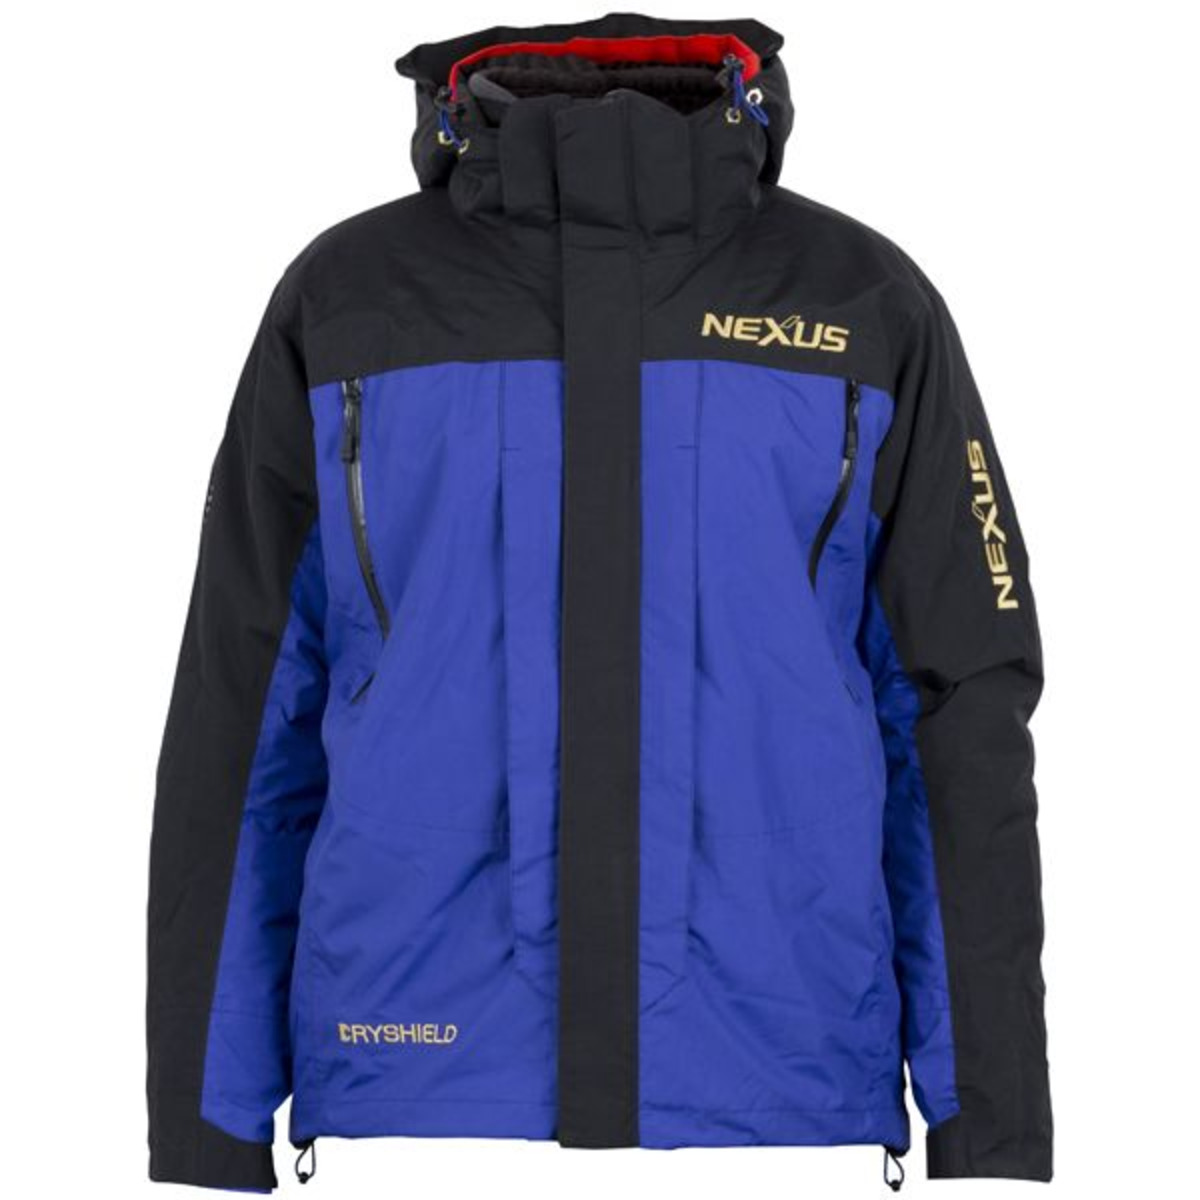 Shimano Nexus Dryshield Advance Cold Weather Jacket - Deep Blue - M